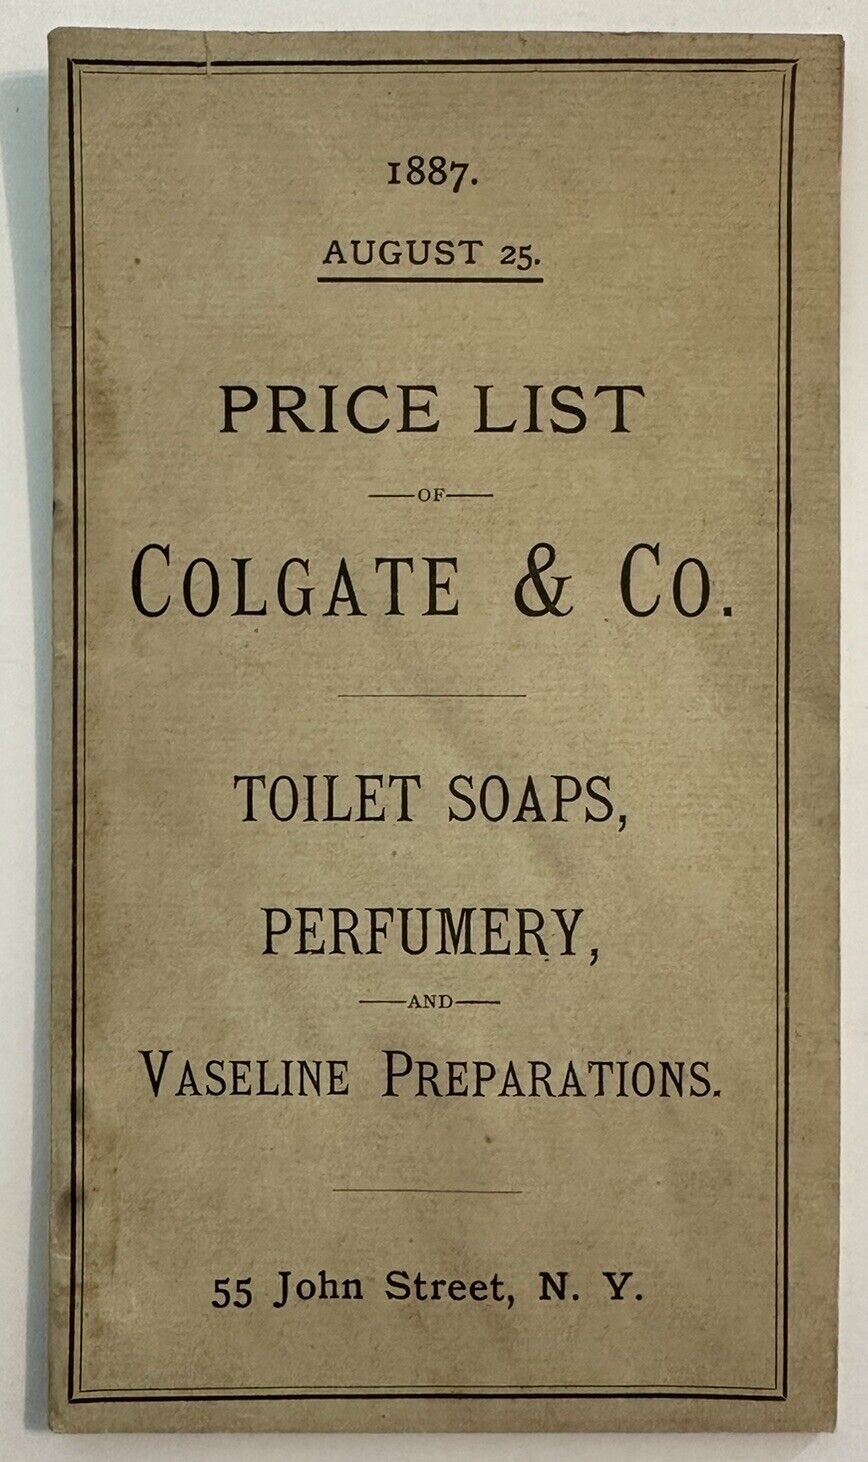 RARE 1887 Colgate & Co. Price List Catelog - Soaps, Perfume, Vaseline W Envelope